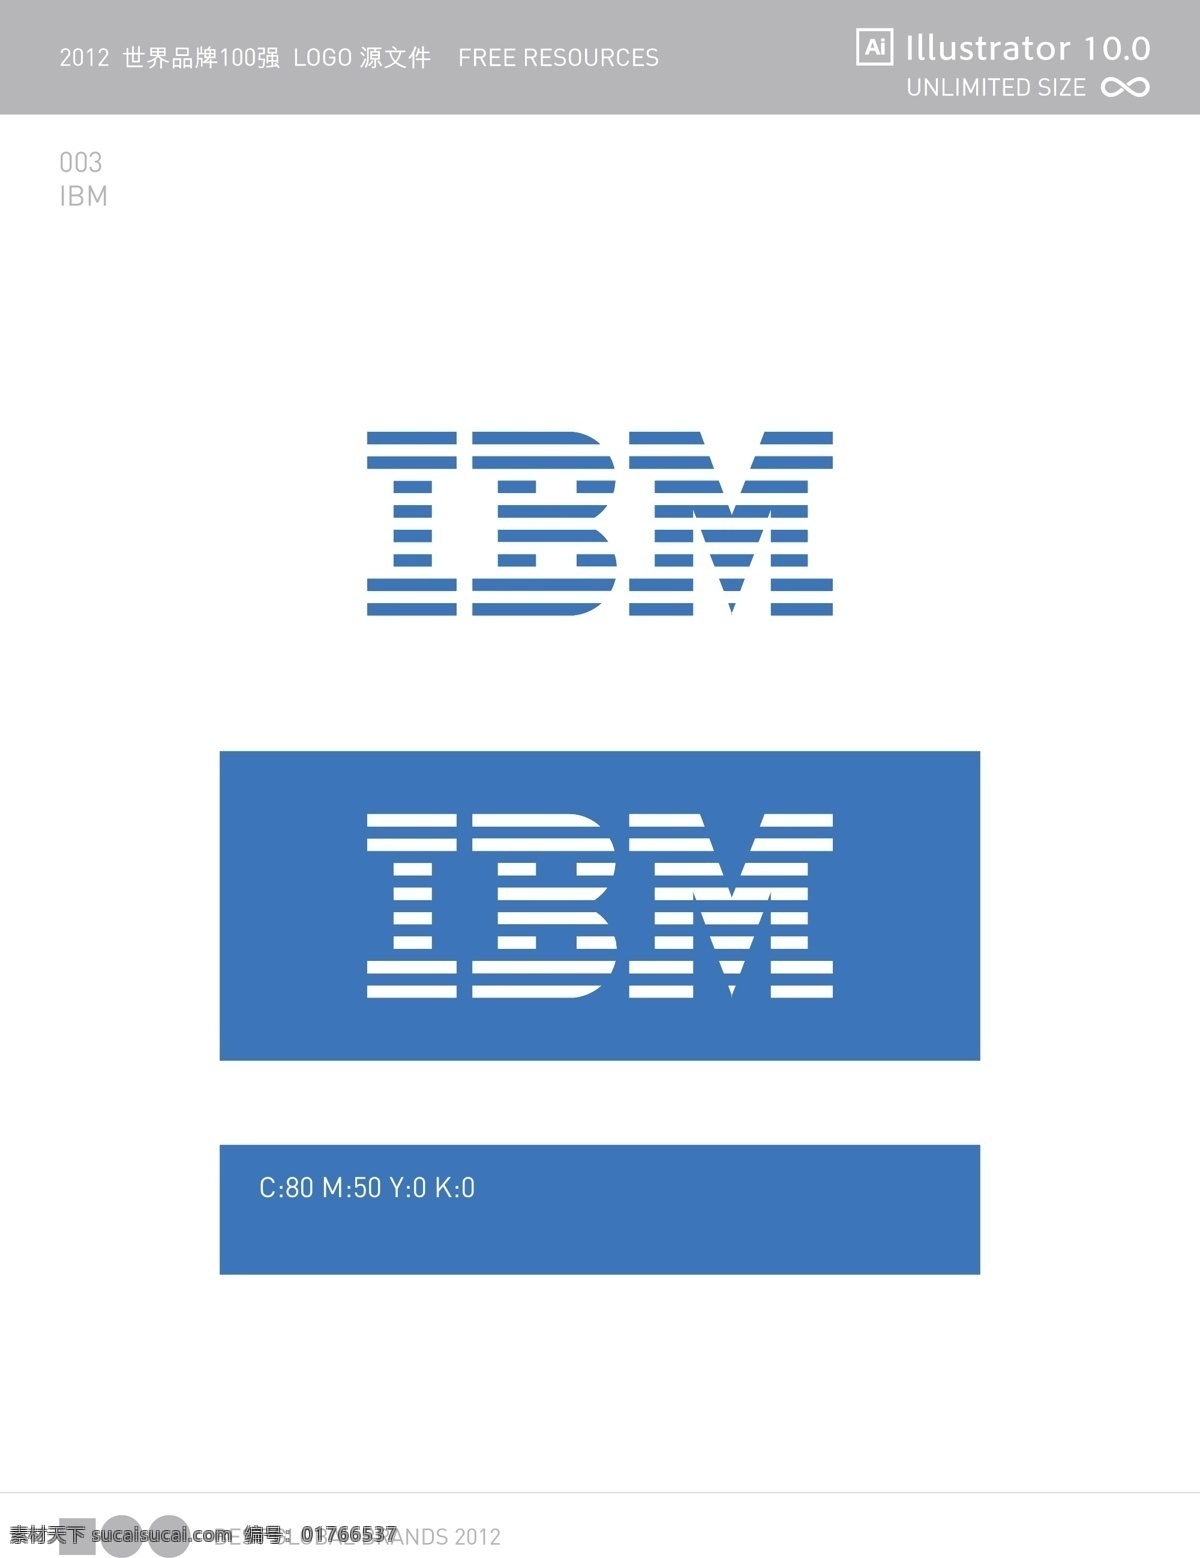 ibm 矢量 logo 应用 标志 商务 宣传册 矢量图